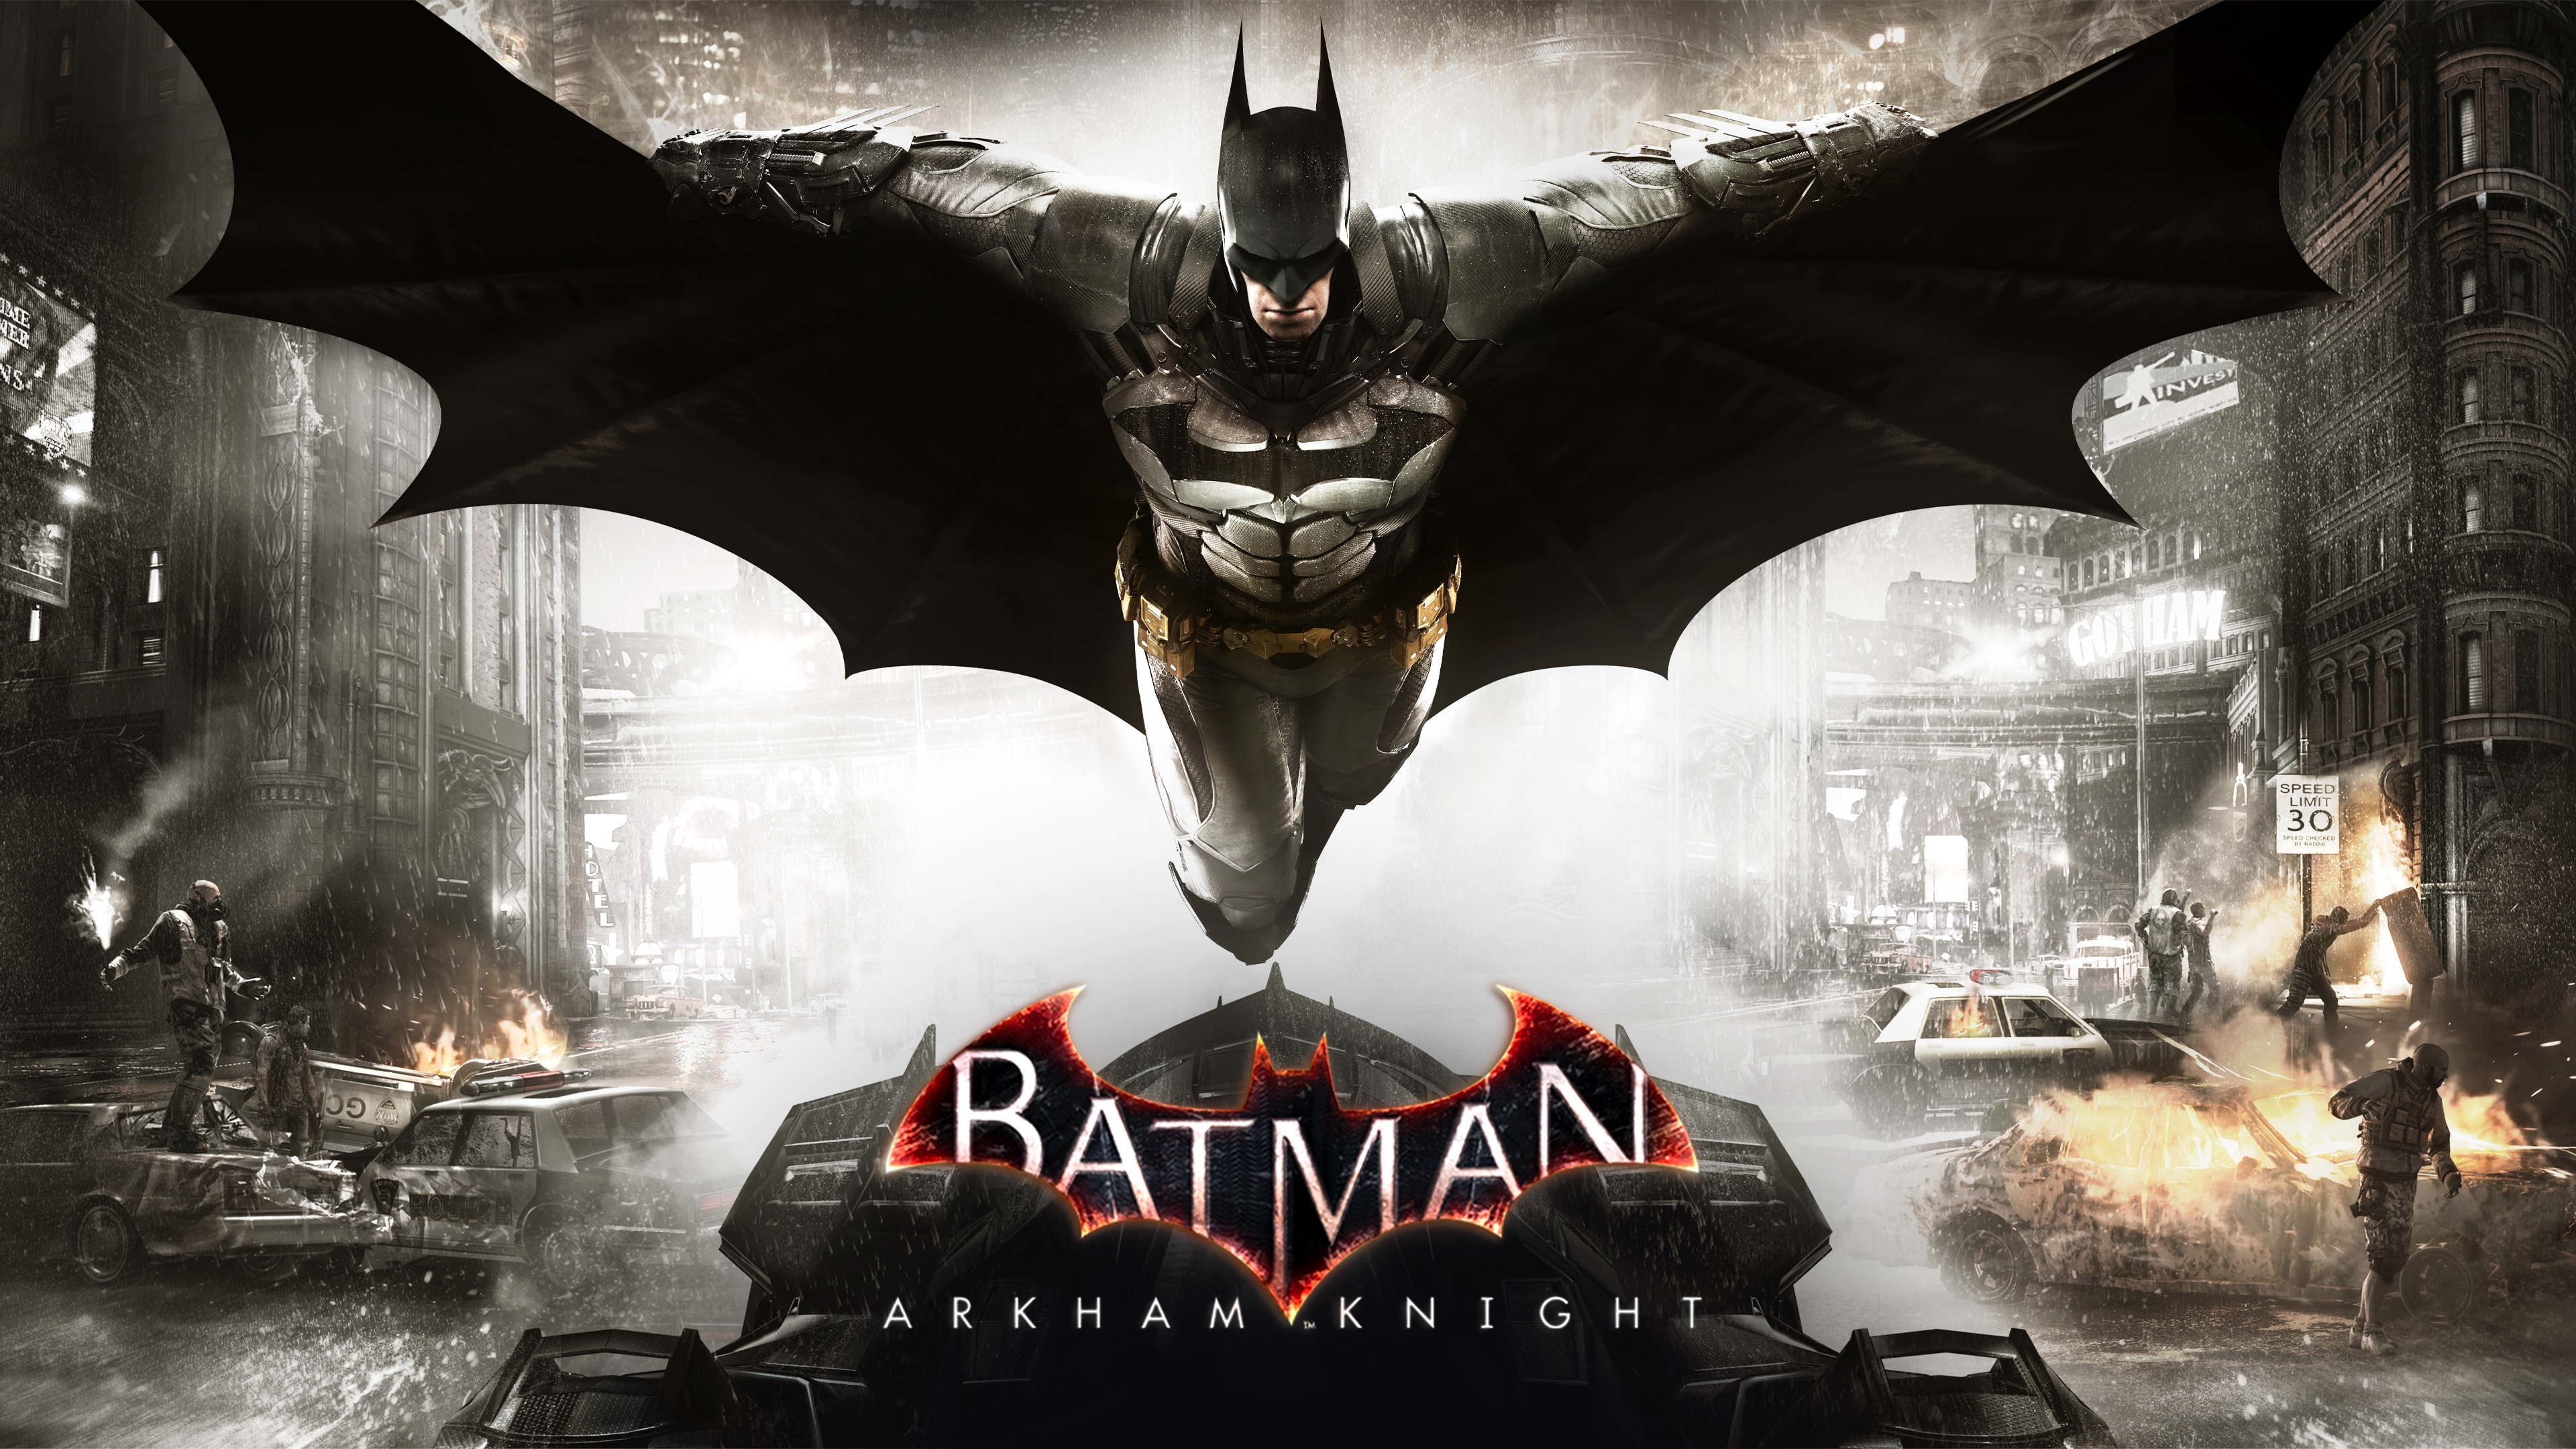 Batman™: Arkham Origins - Season Pass on Steam